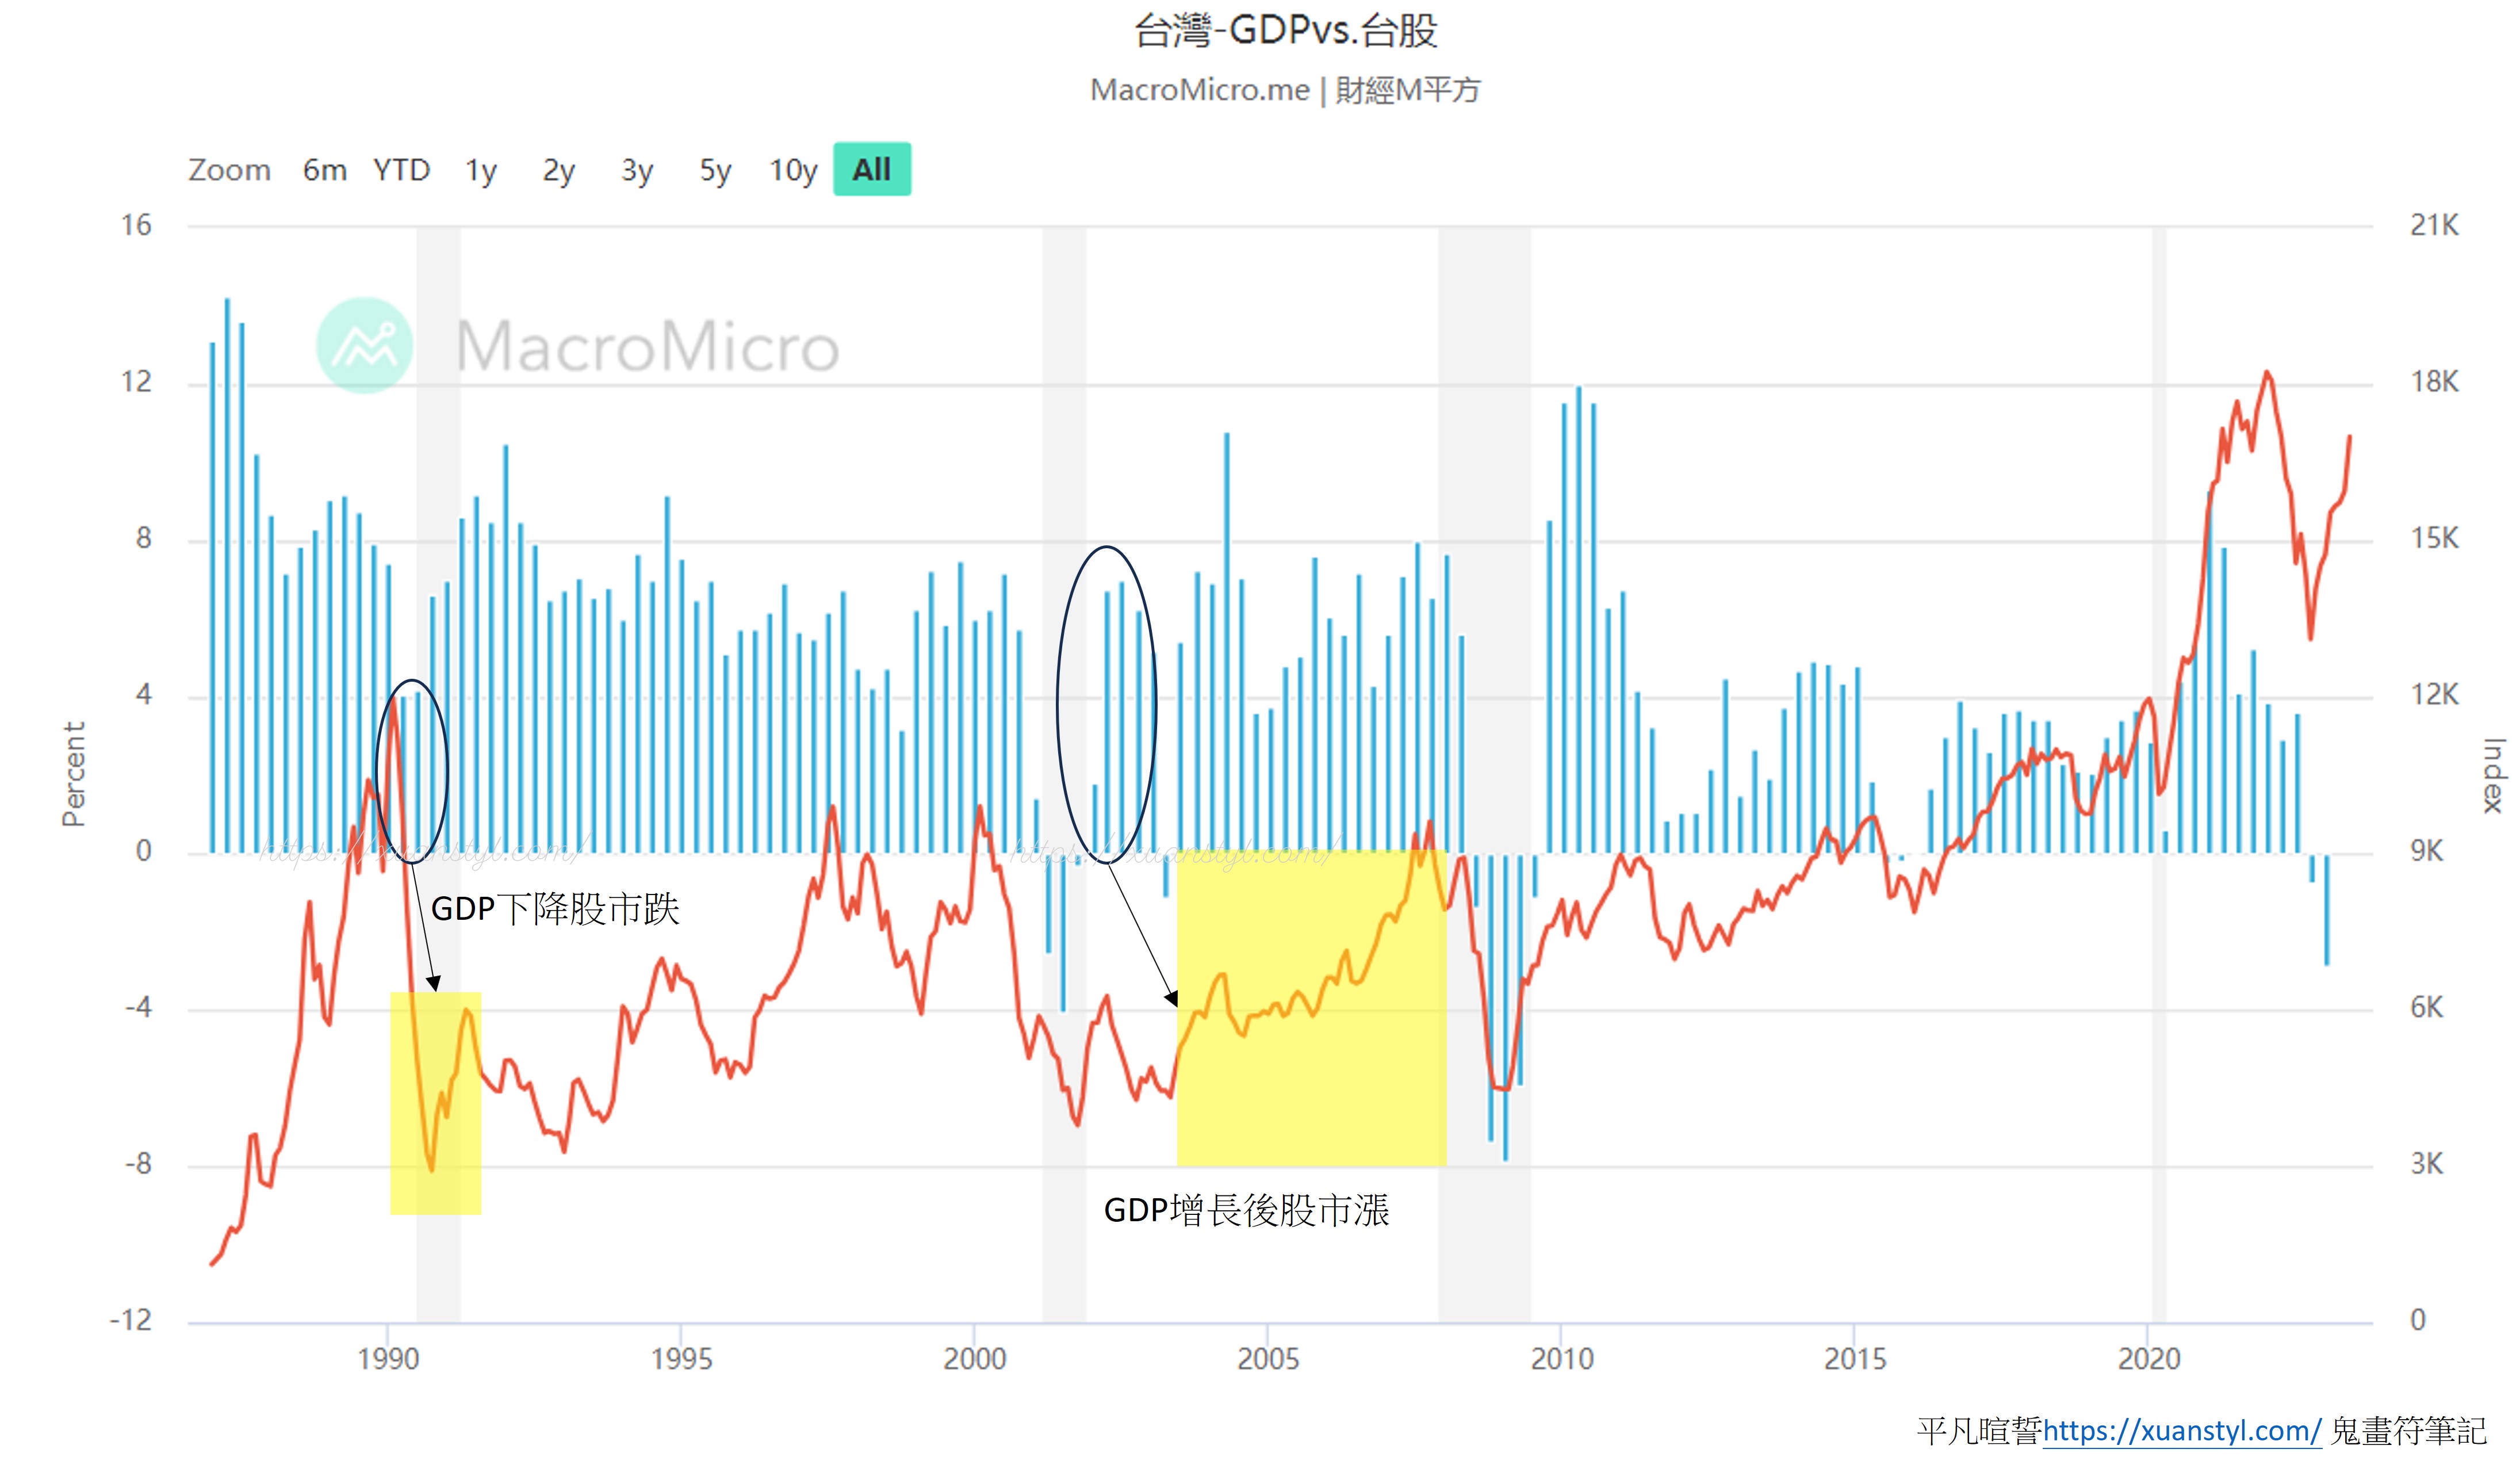 GDP成長率與大盤正相關(台灣GDP與大盤股價)